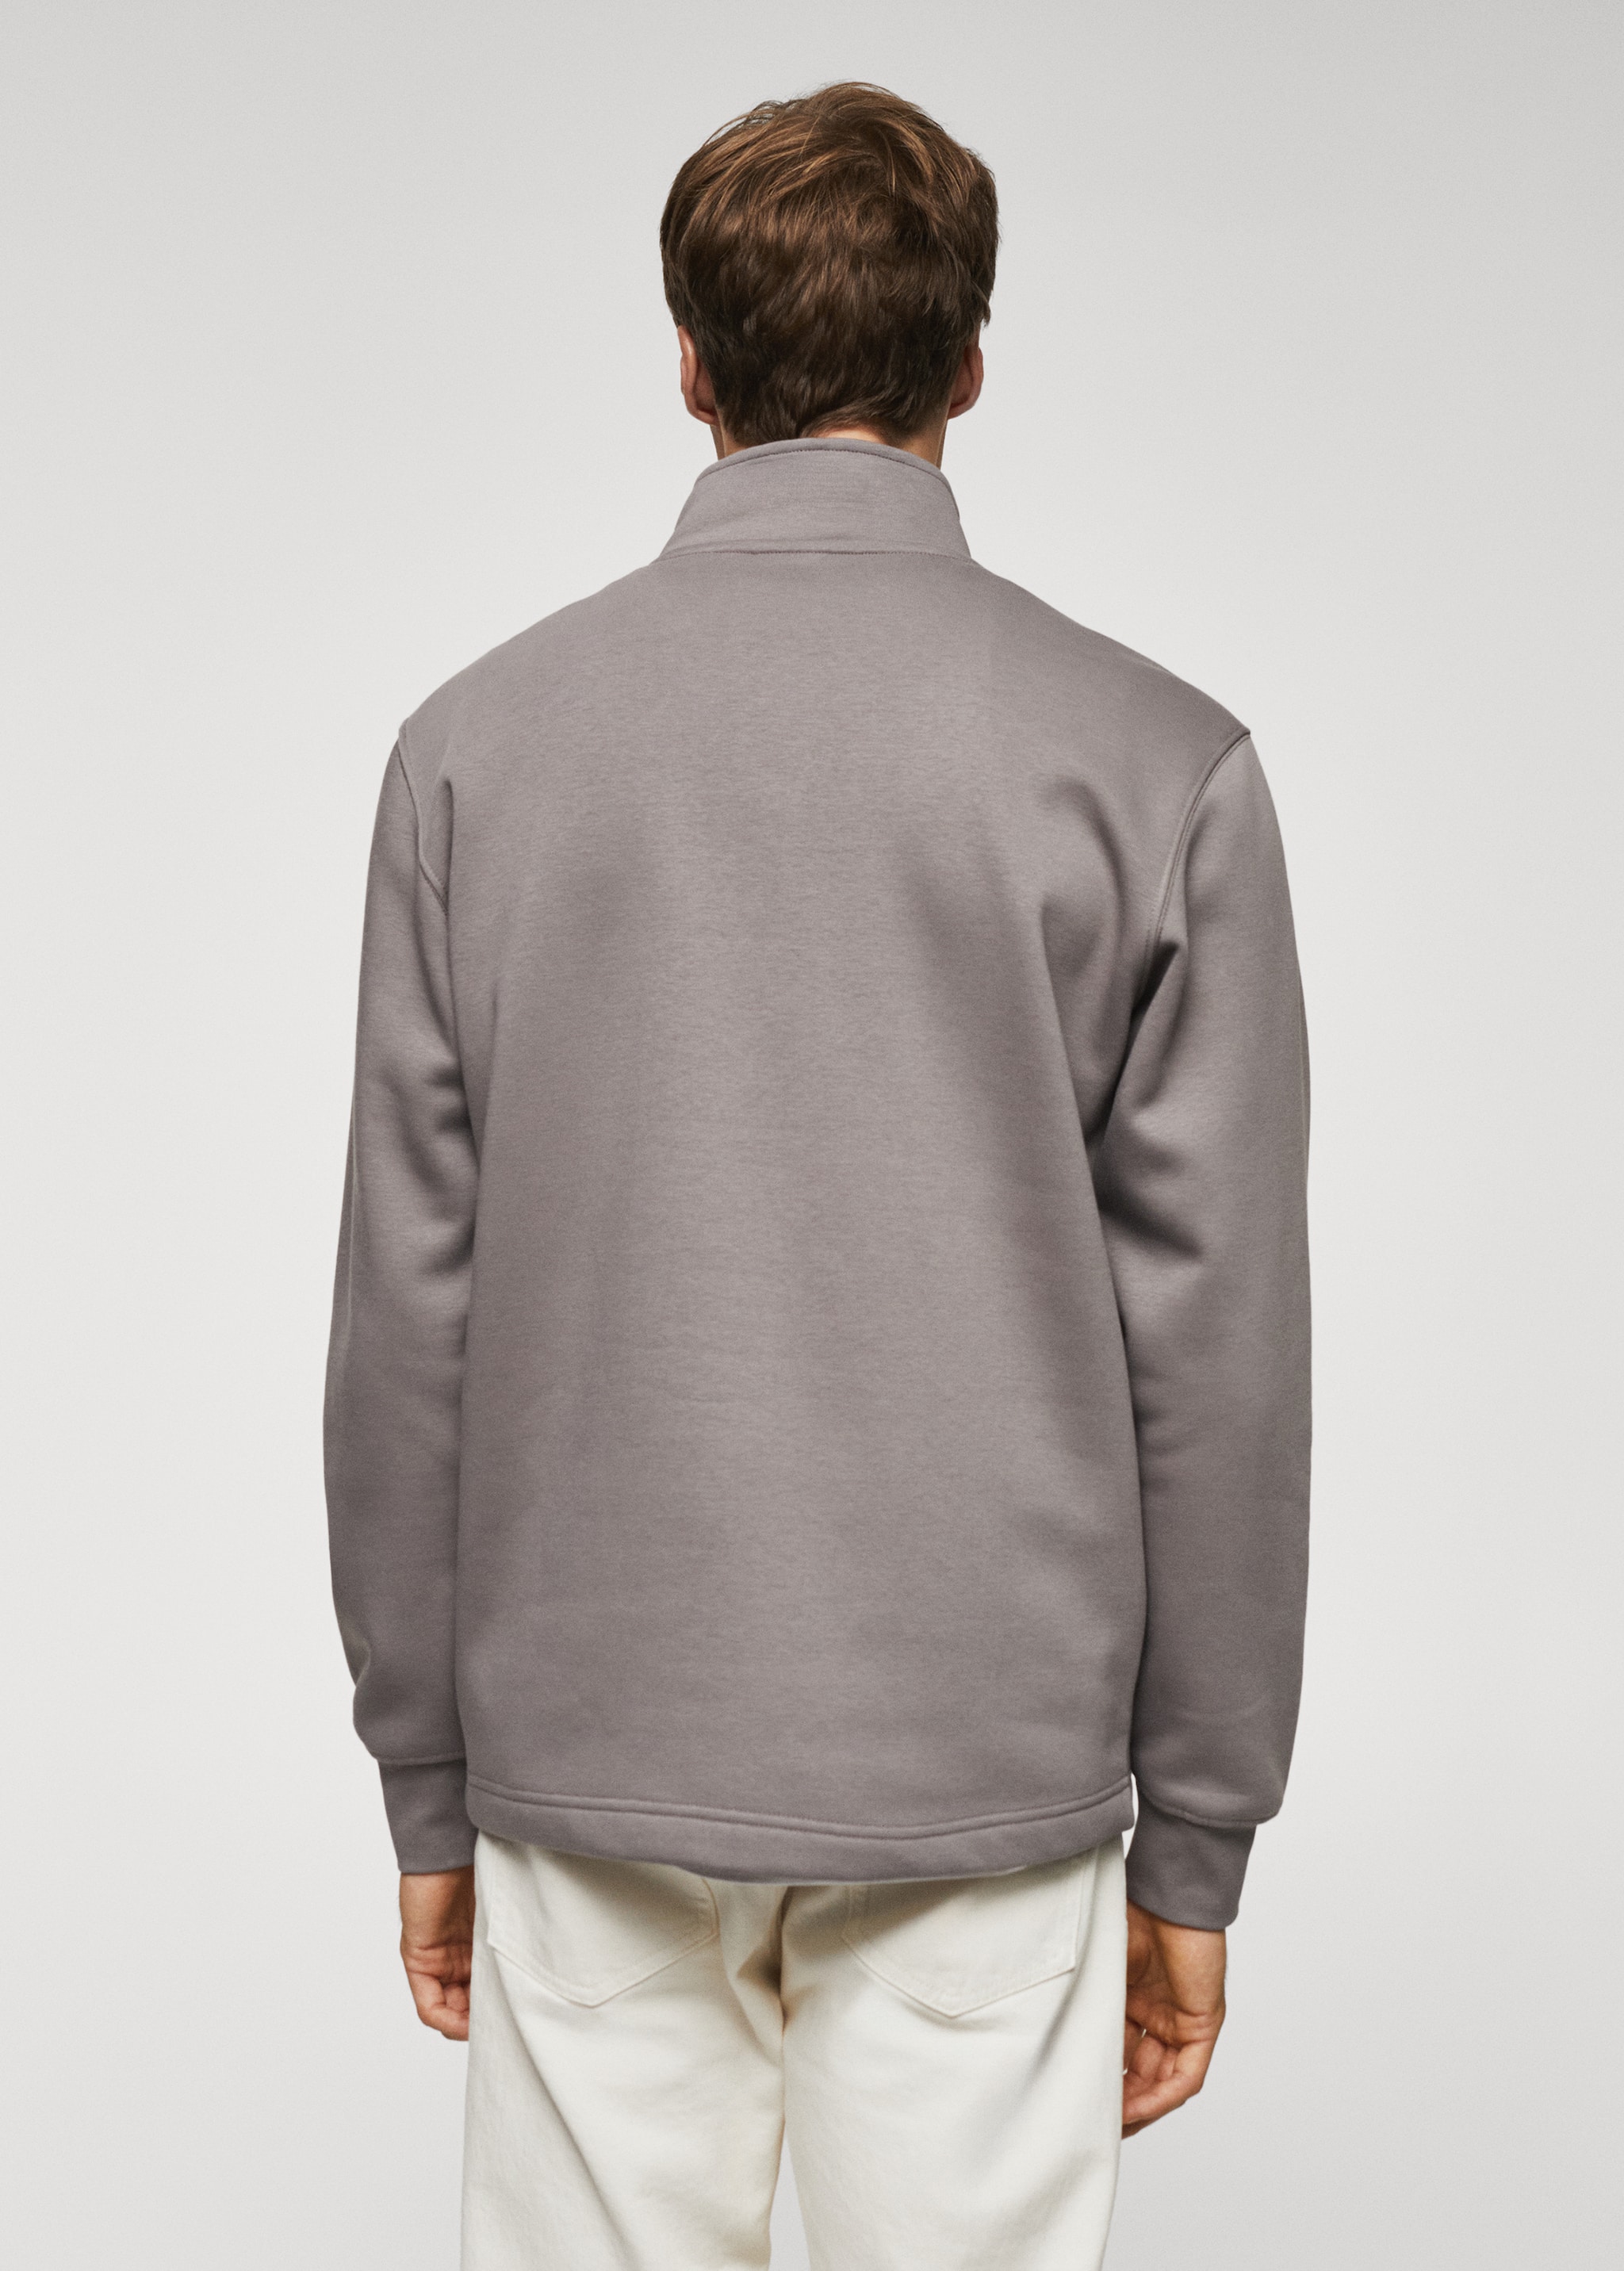 Cotton sweatshirt with zip neck - Reverse of the article